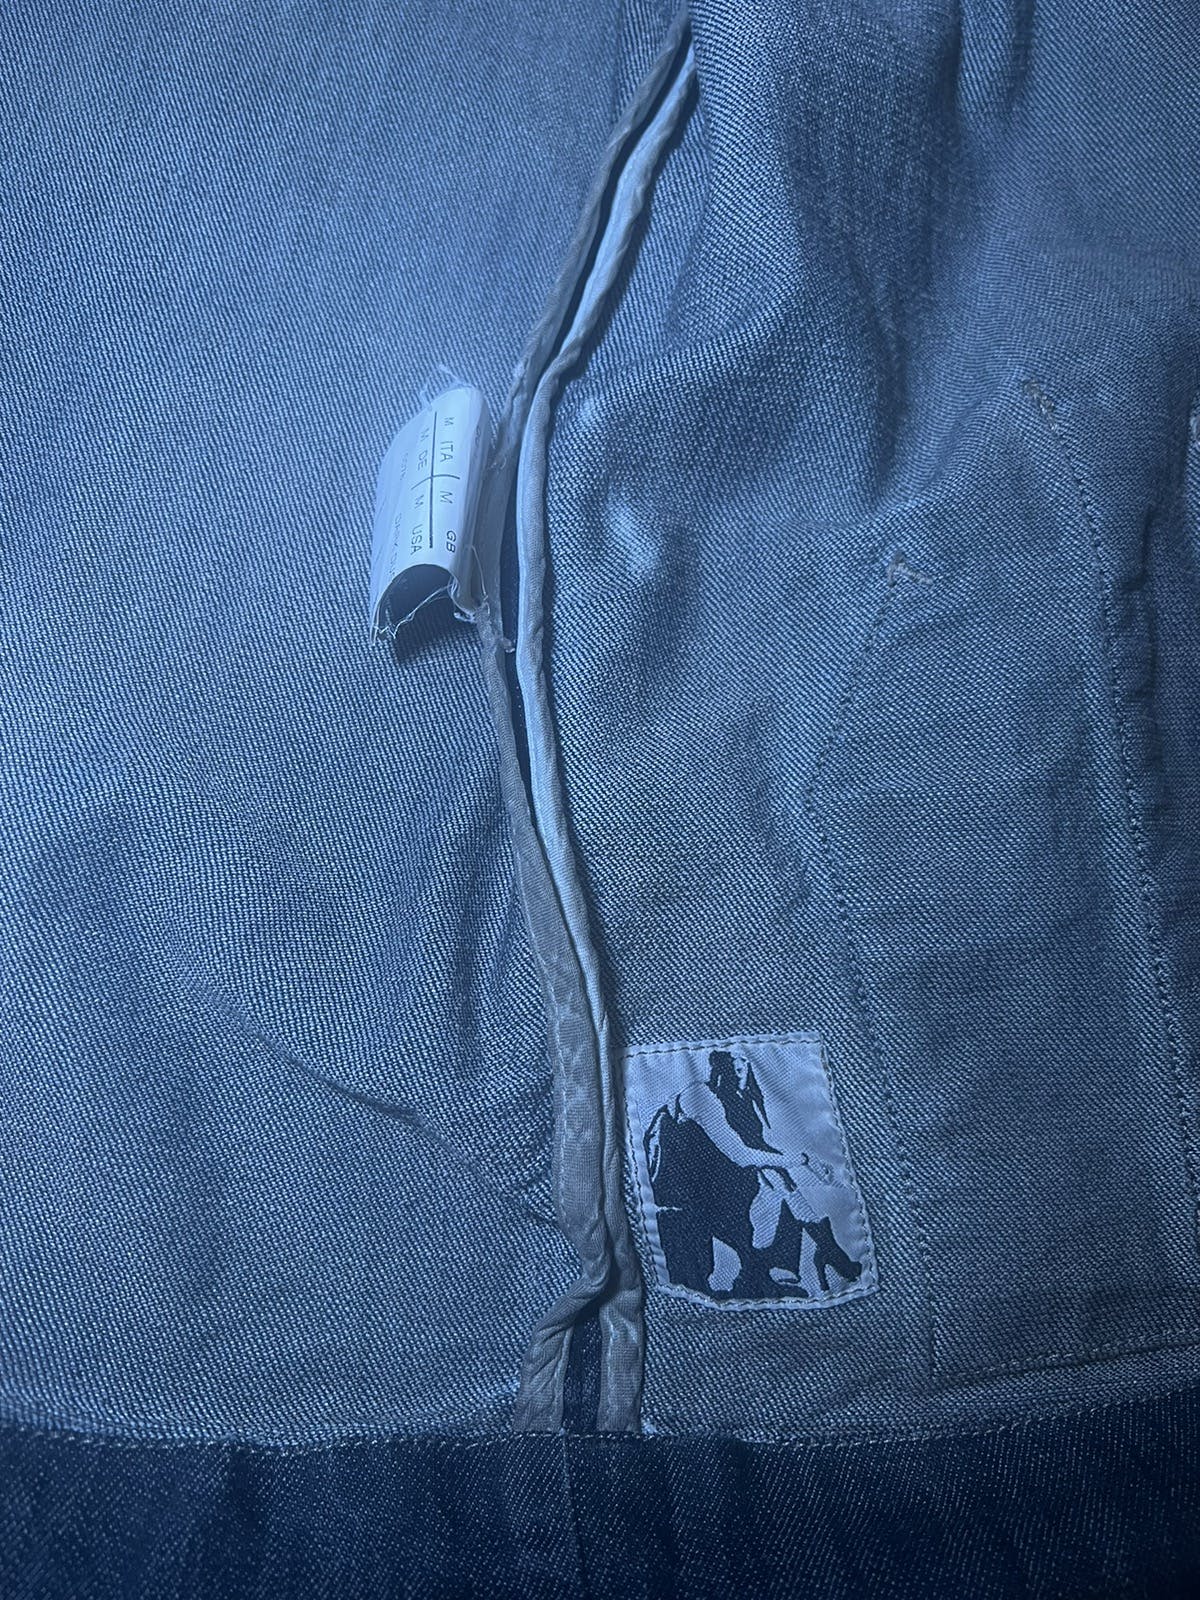 Coated Denim Leather-Sleeved Zip-Up - 4